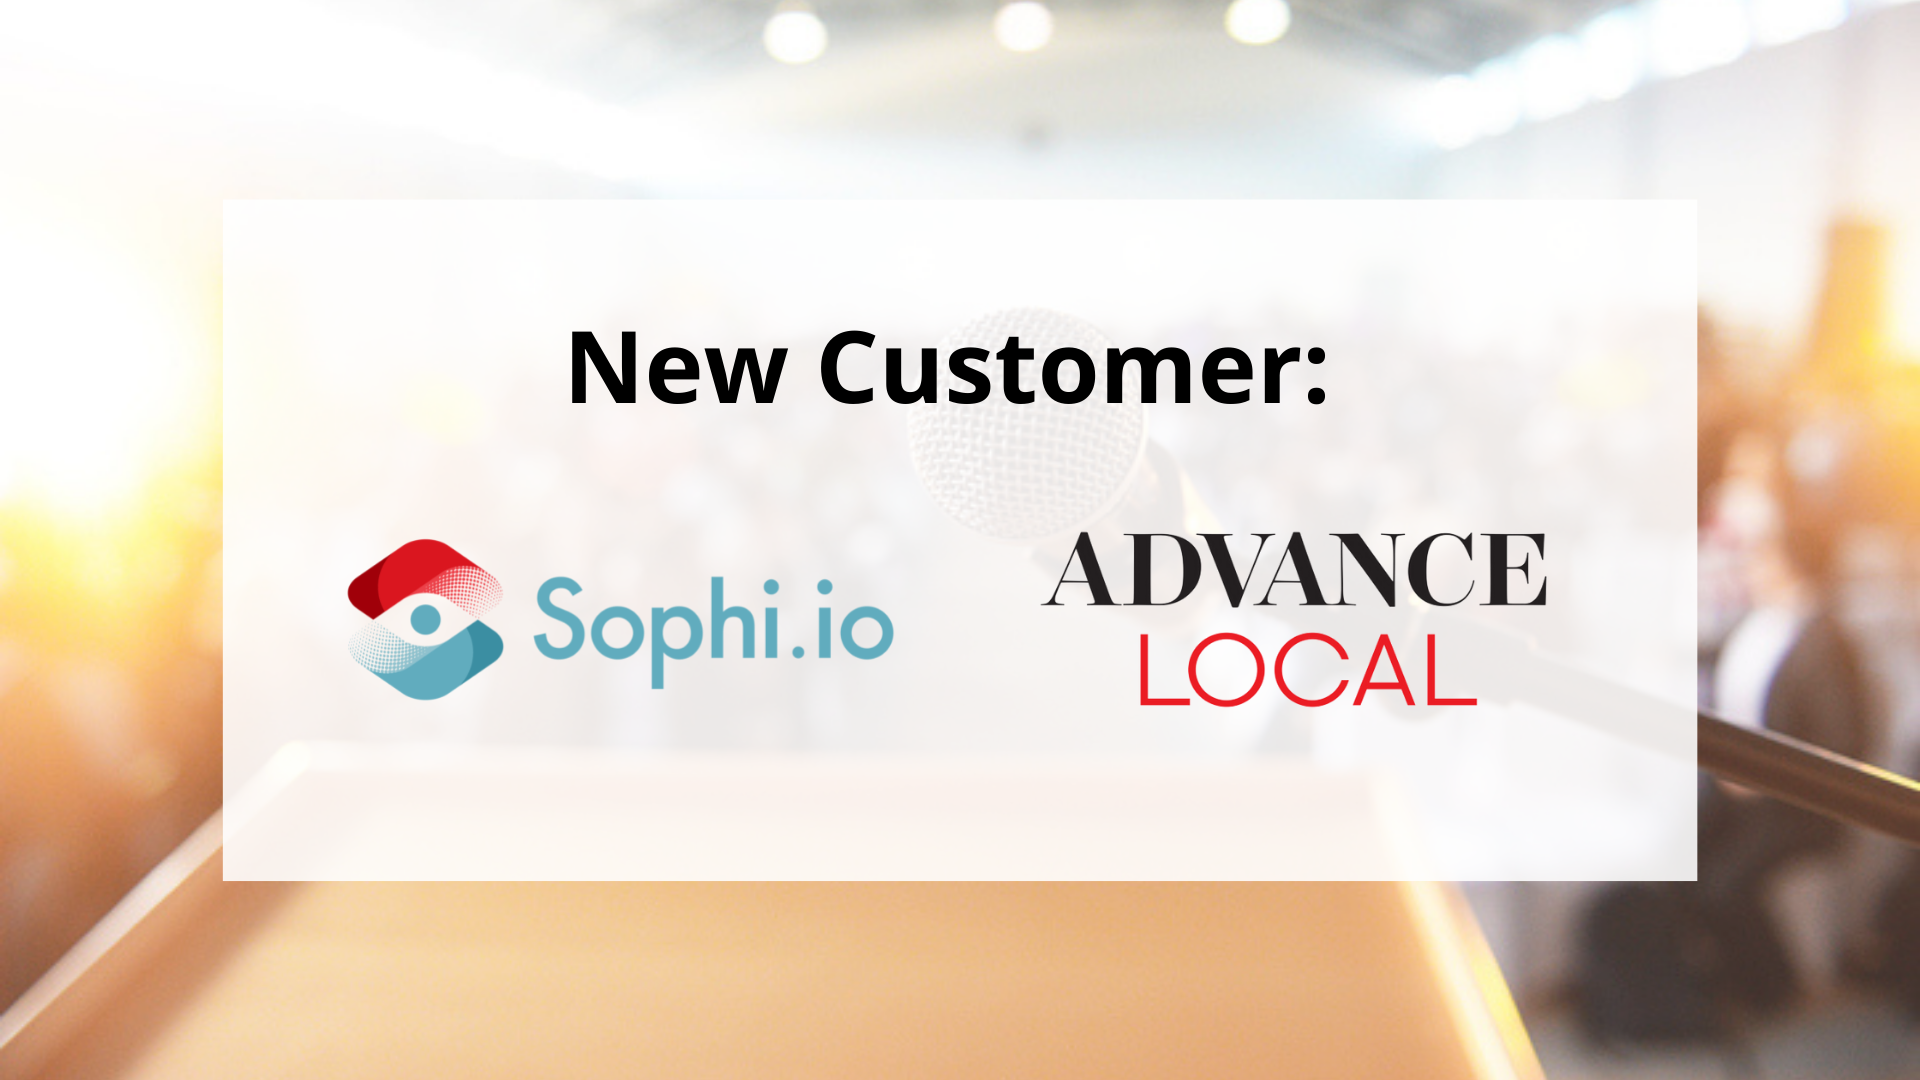 Advance Local is a Soph.io customer